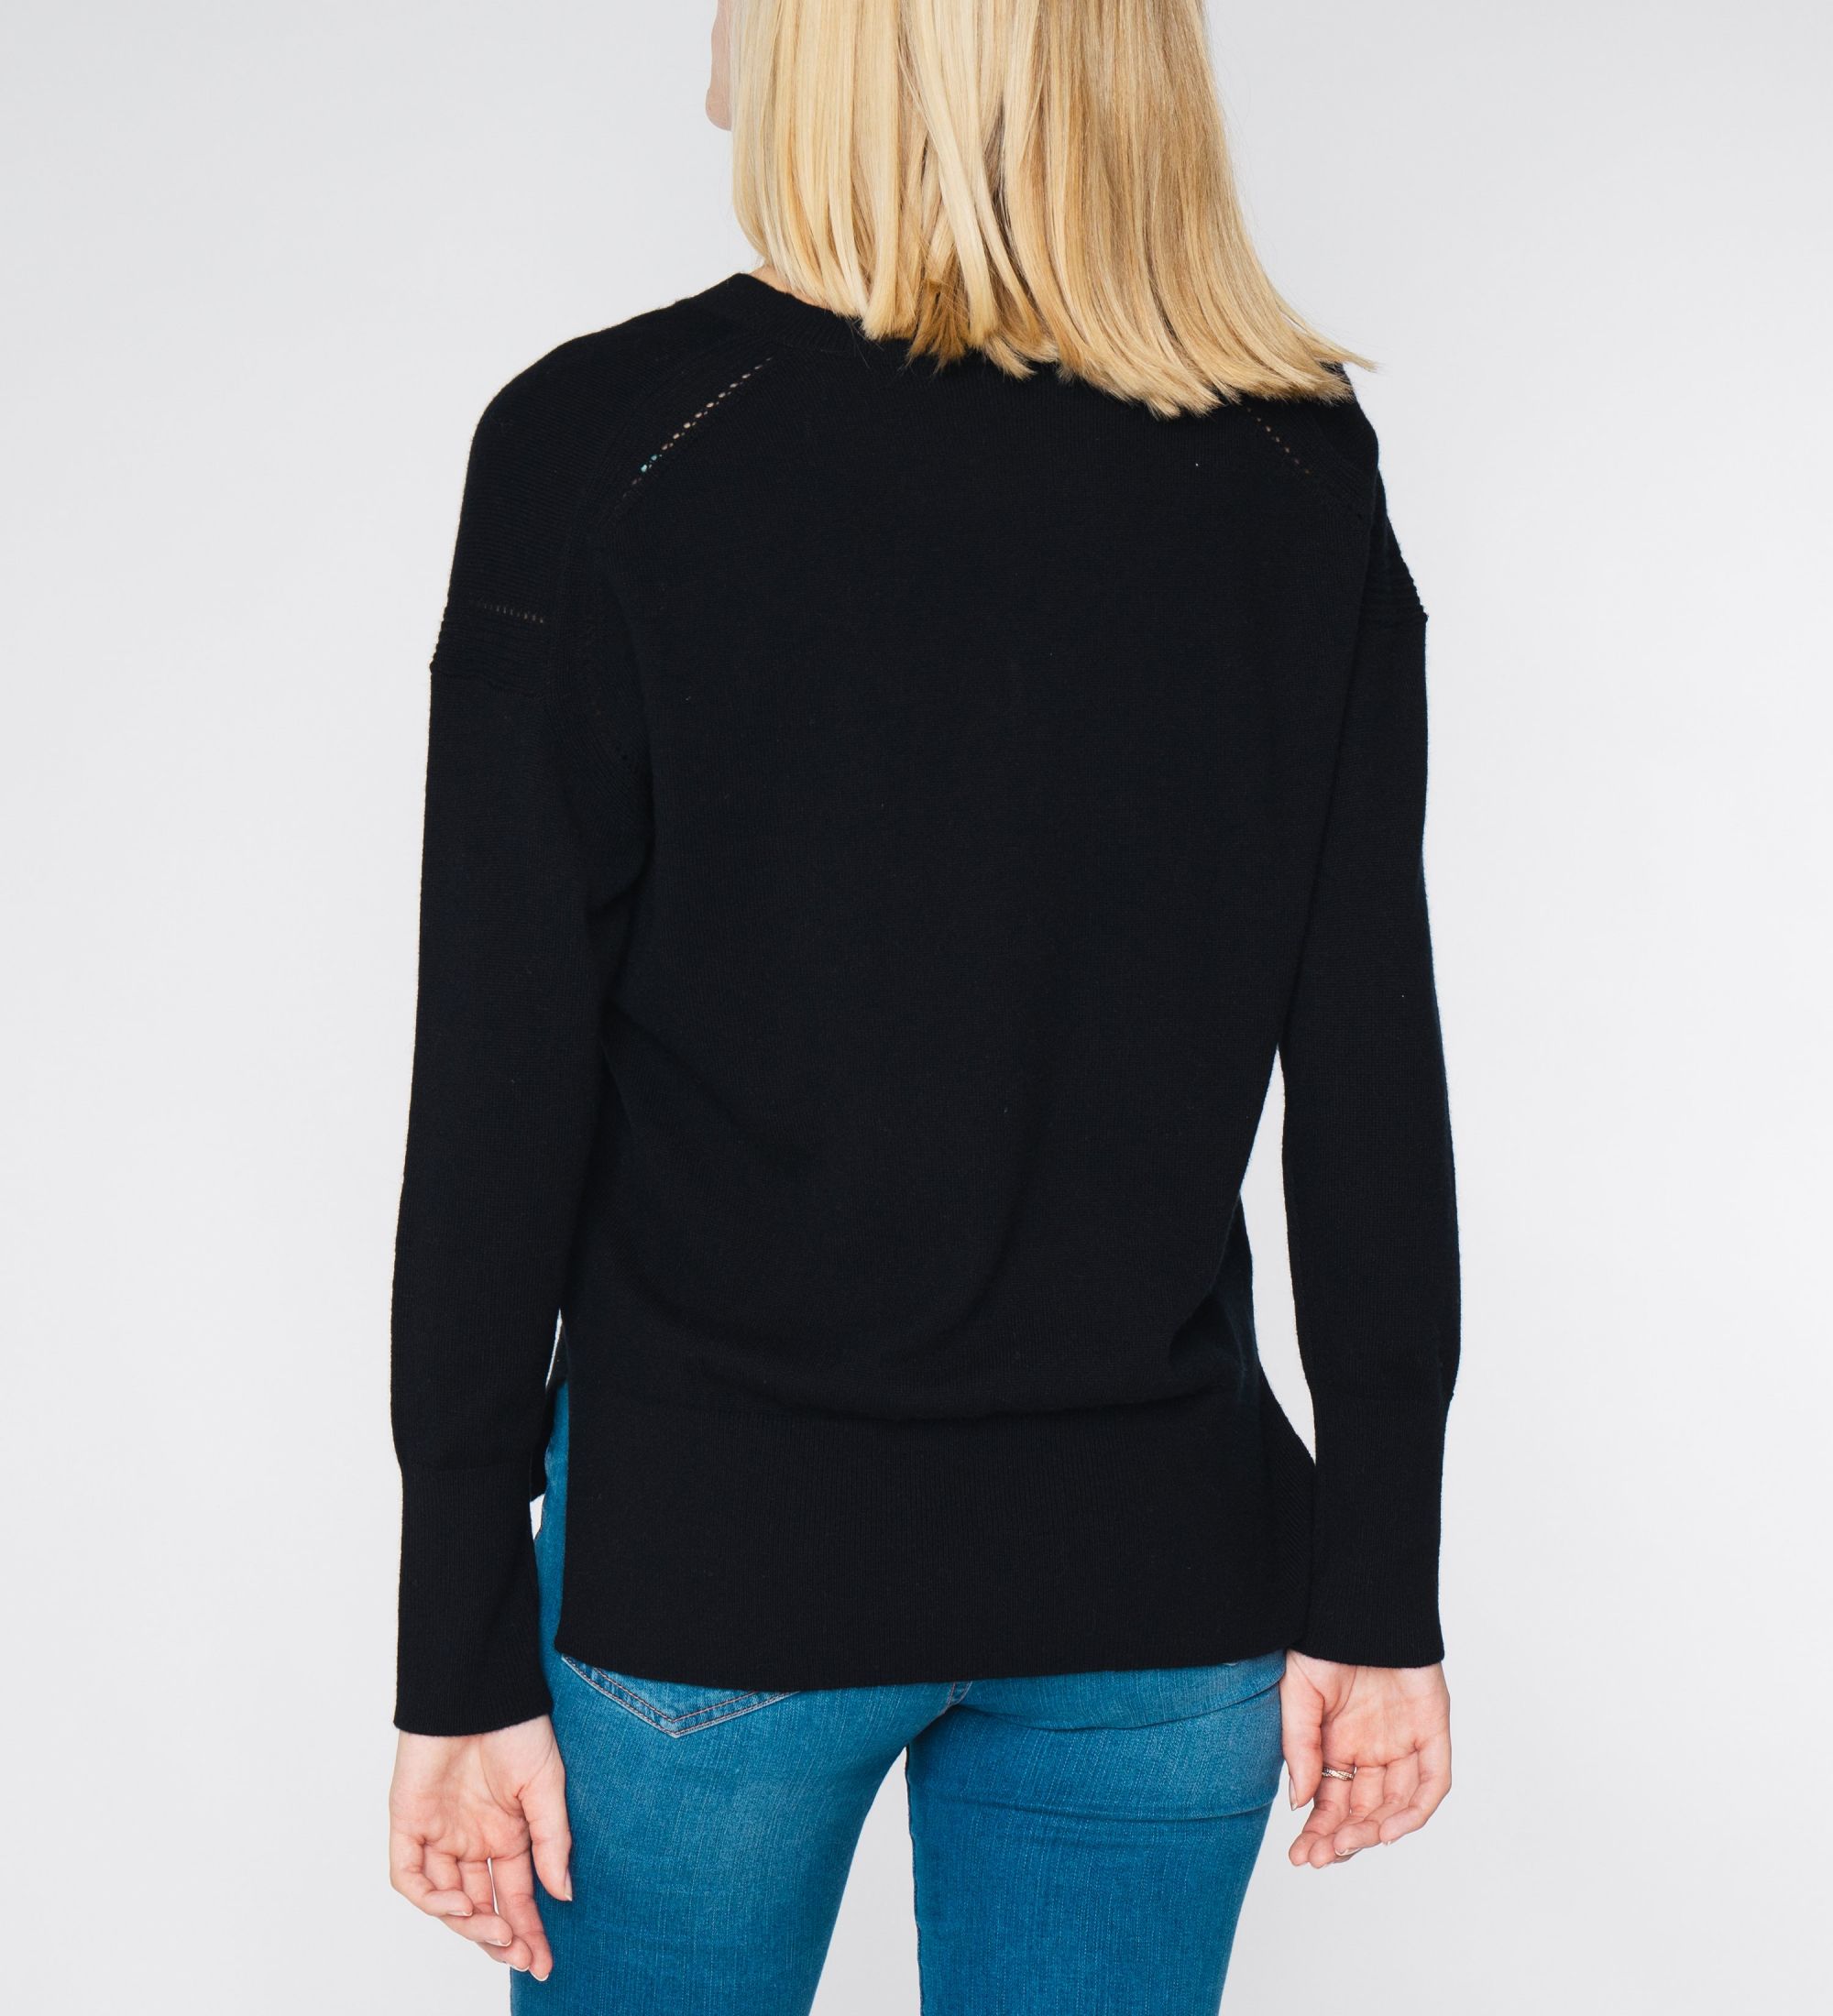 LEEZ Women Cashmere V-Neck Sweater - Black